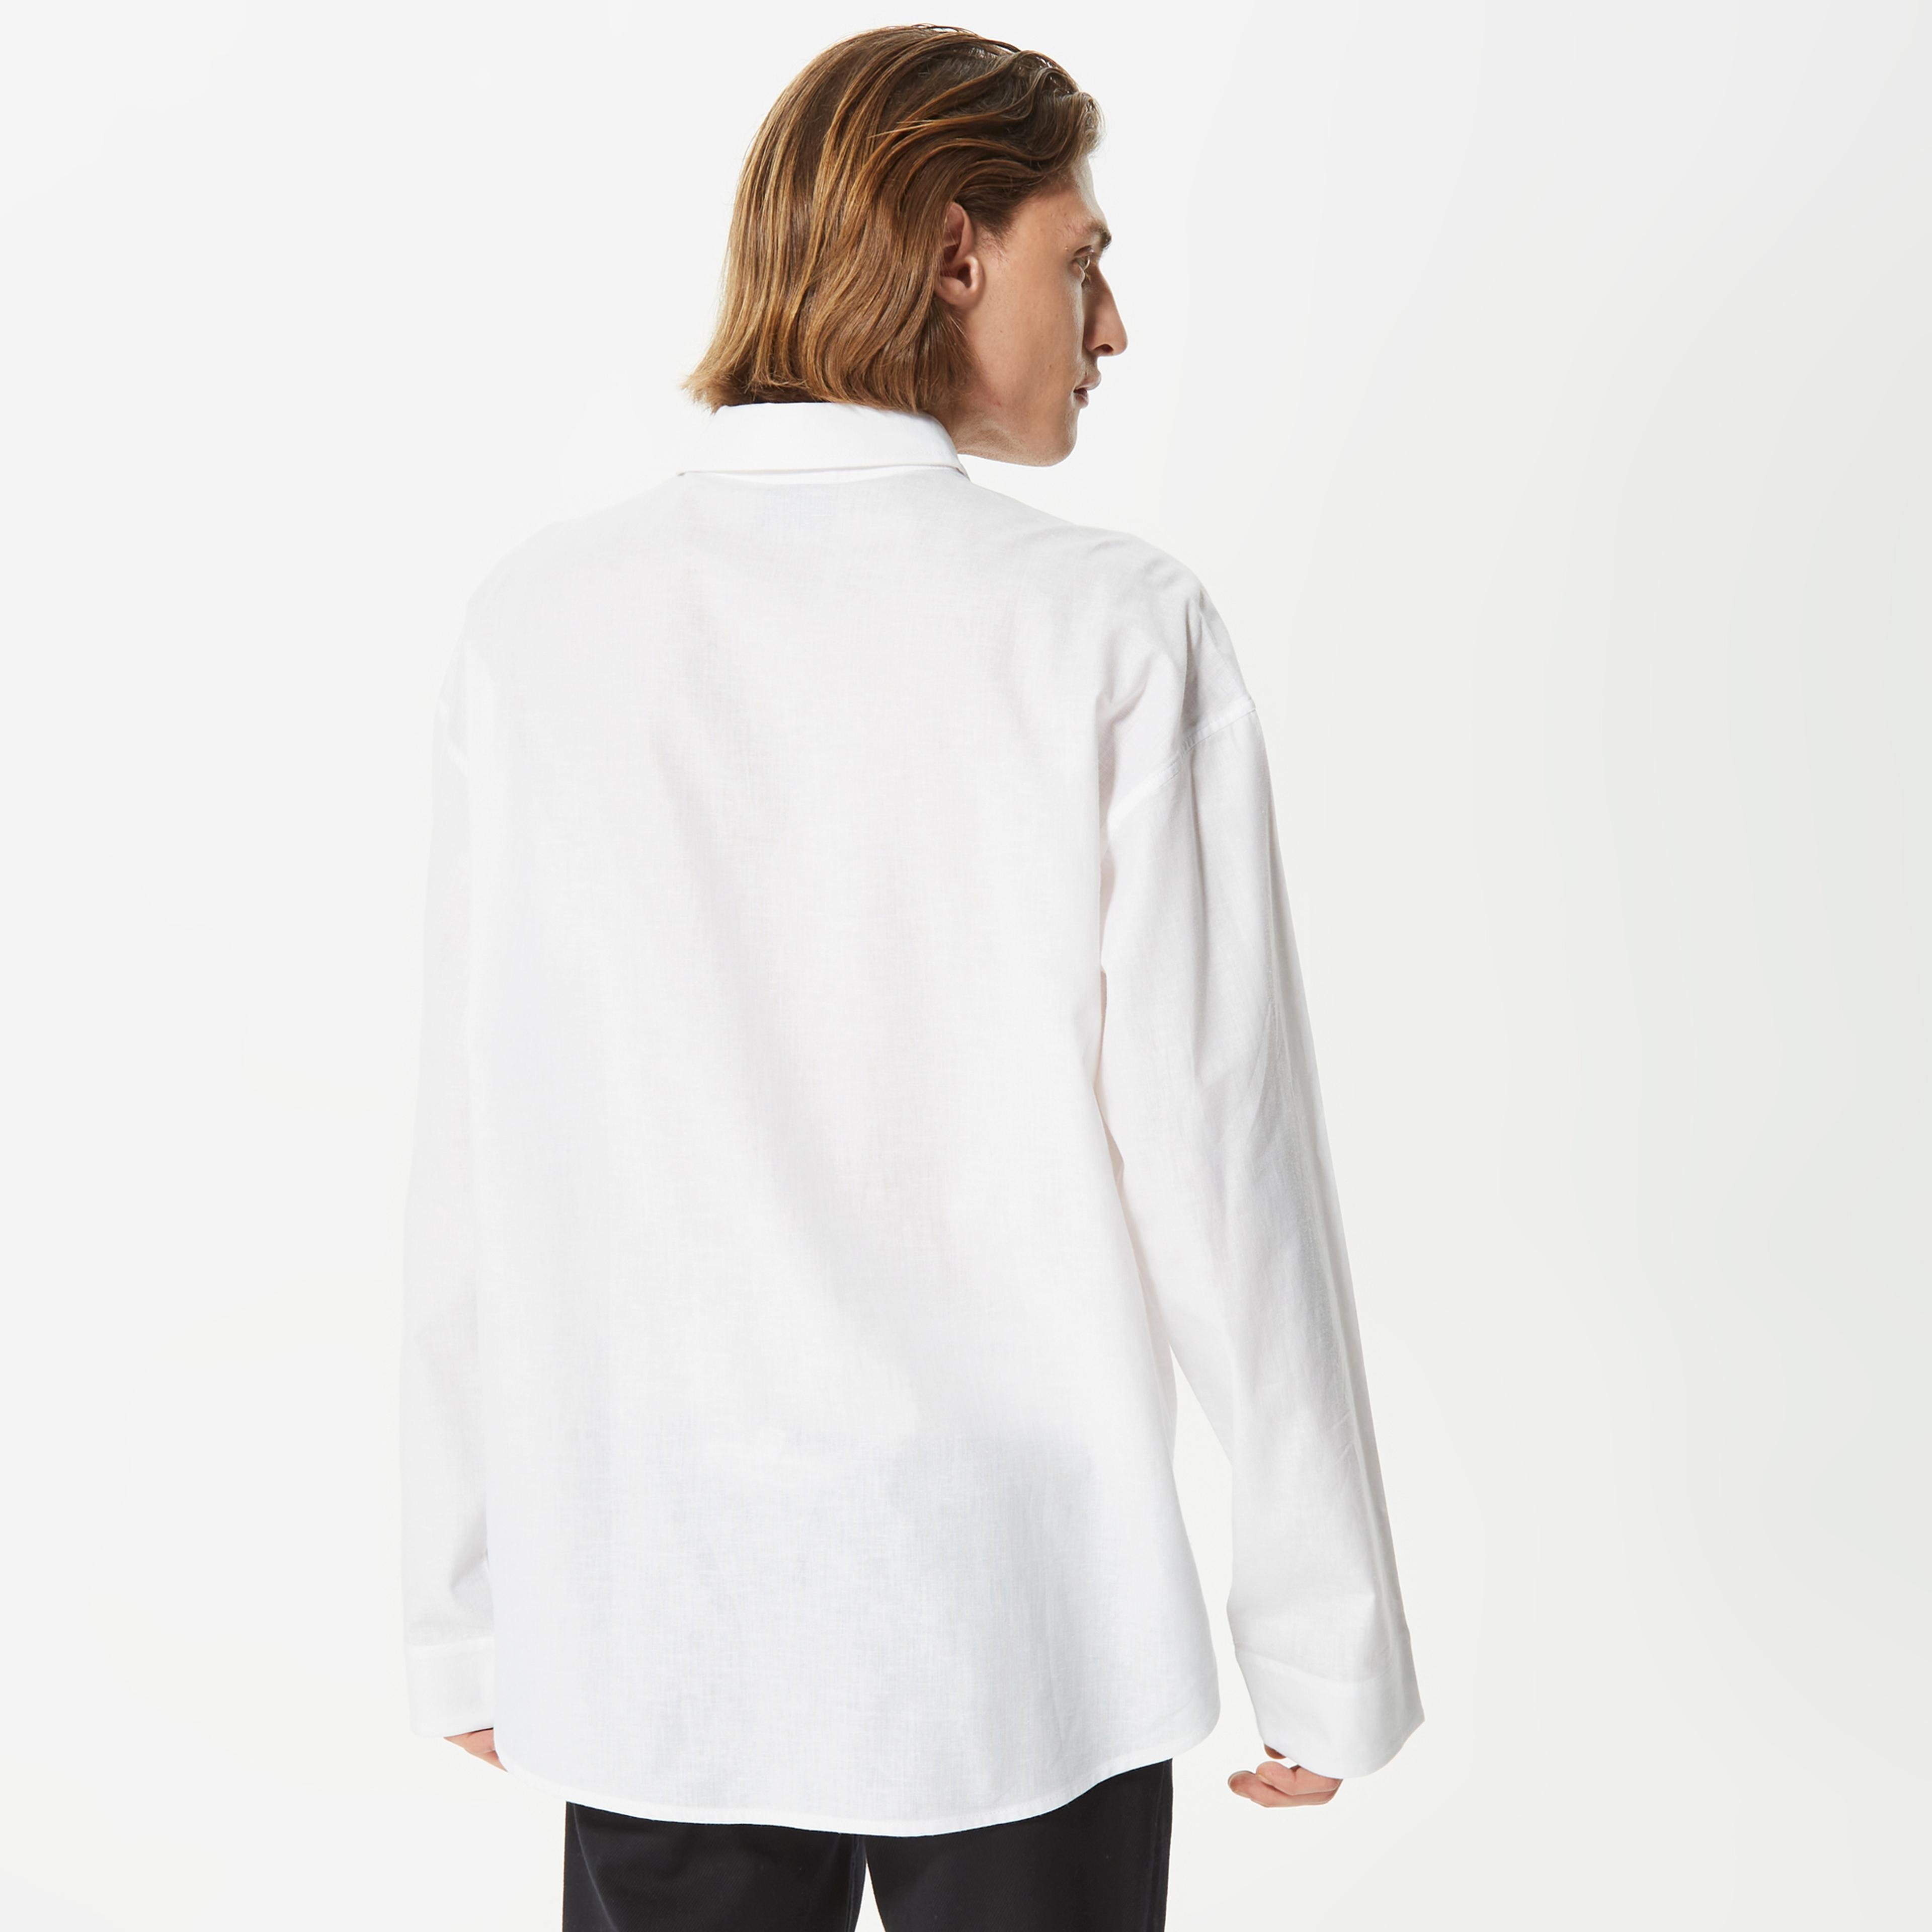 Soon To Be Announced Sportswear Unisex Beyaz Gömlek